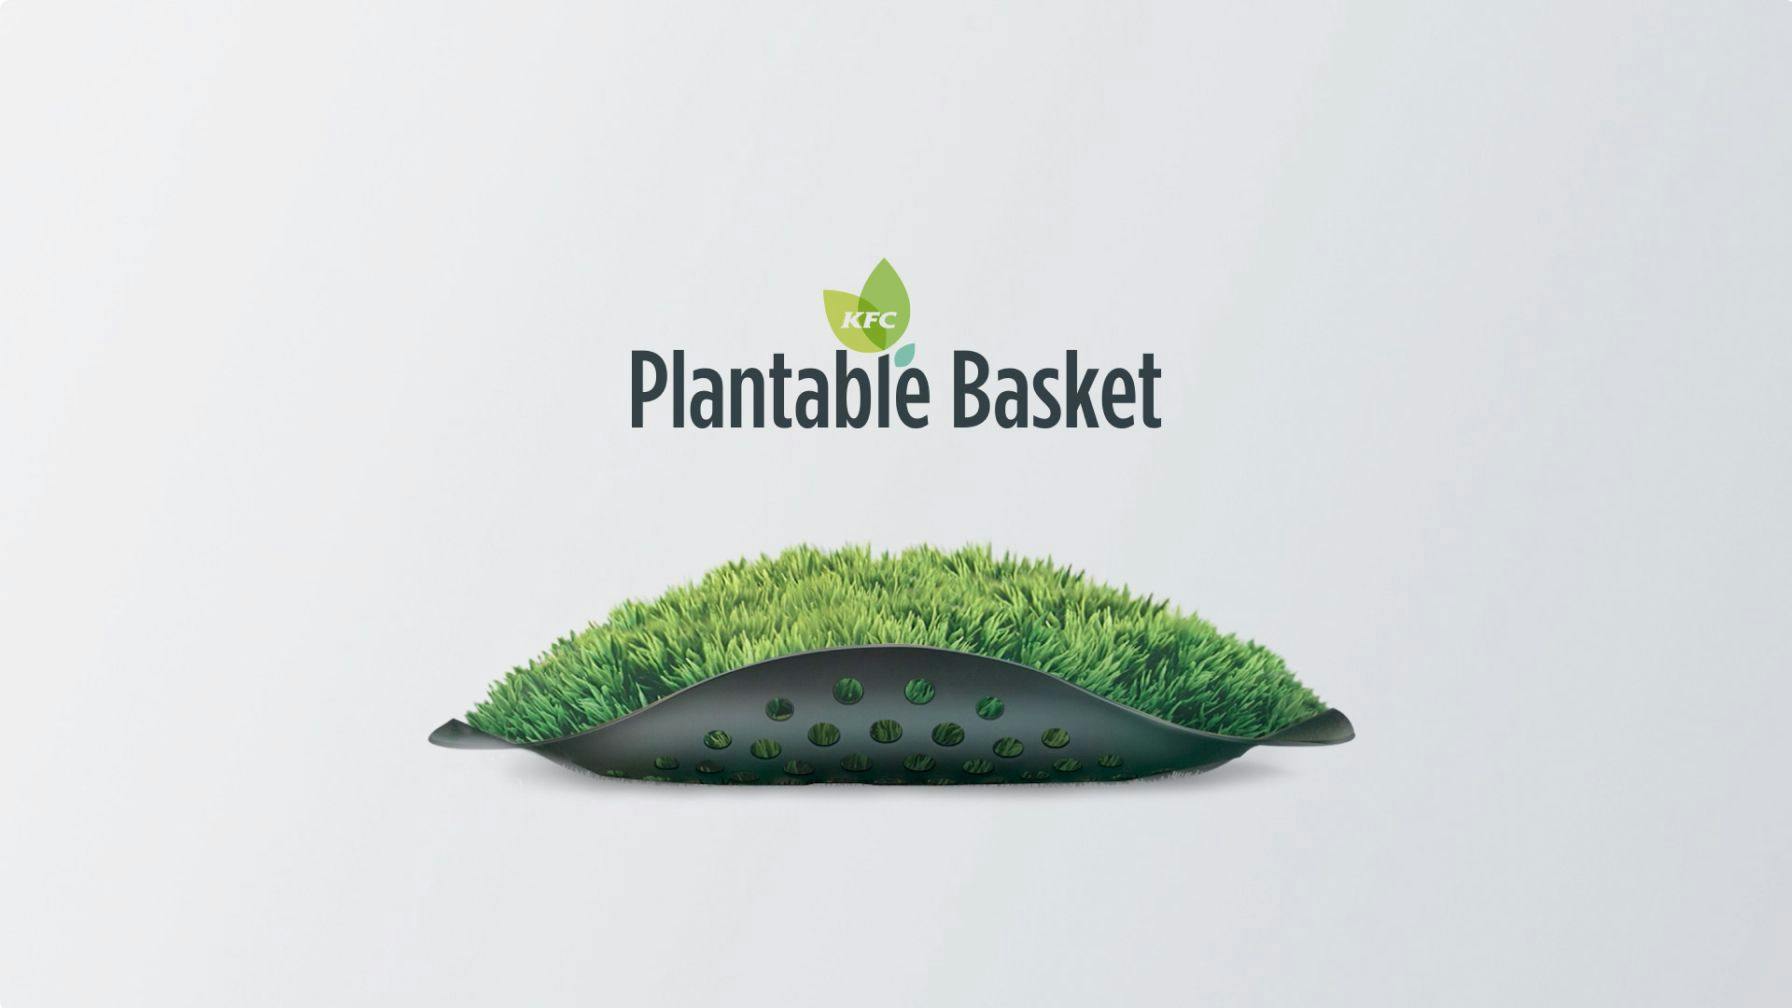 KFC Plantable Basket